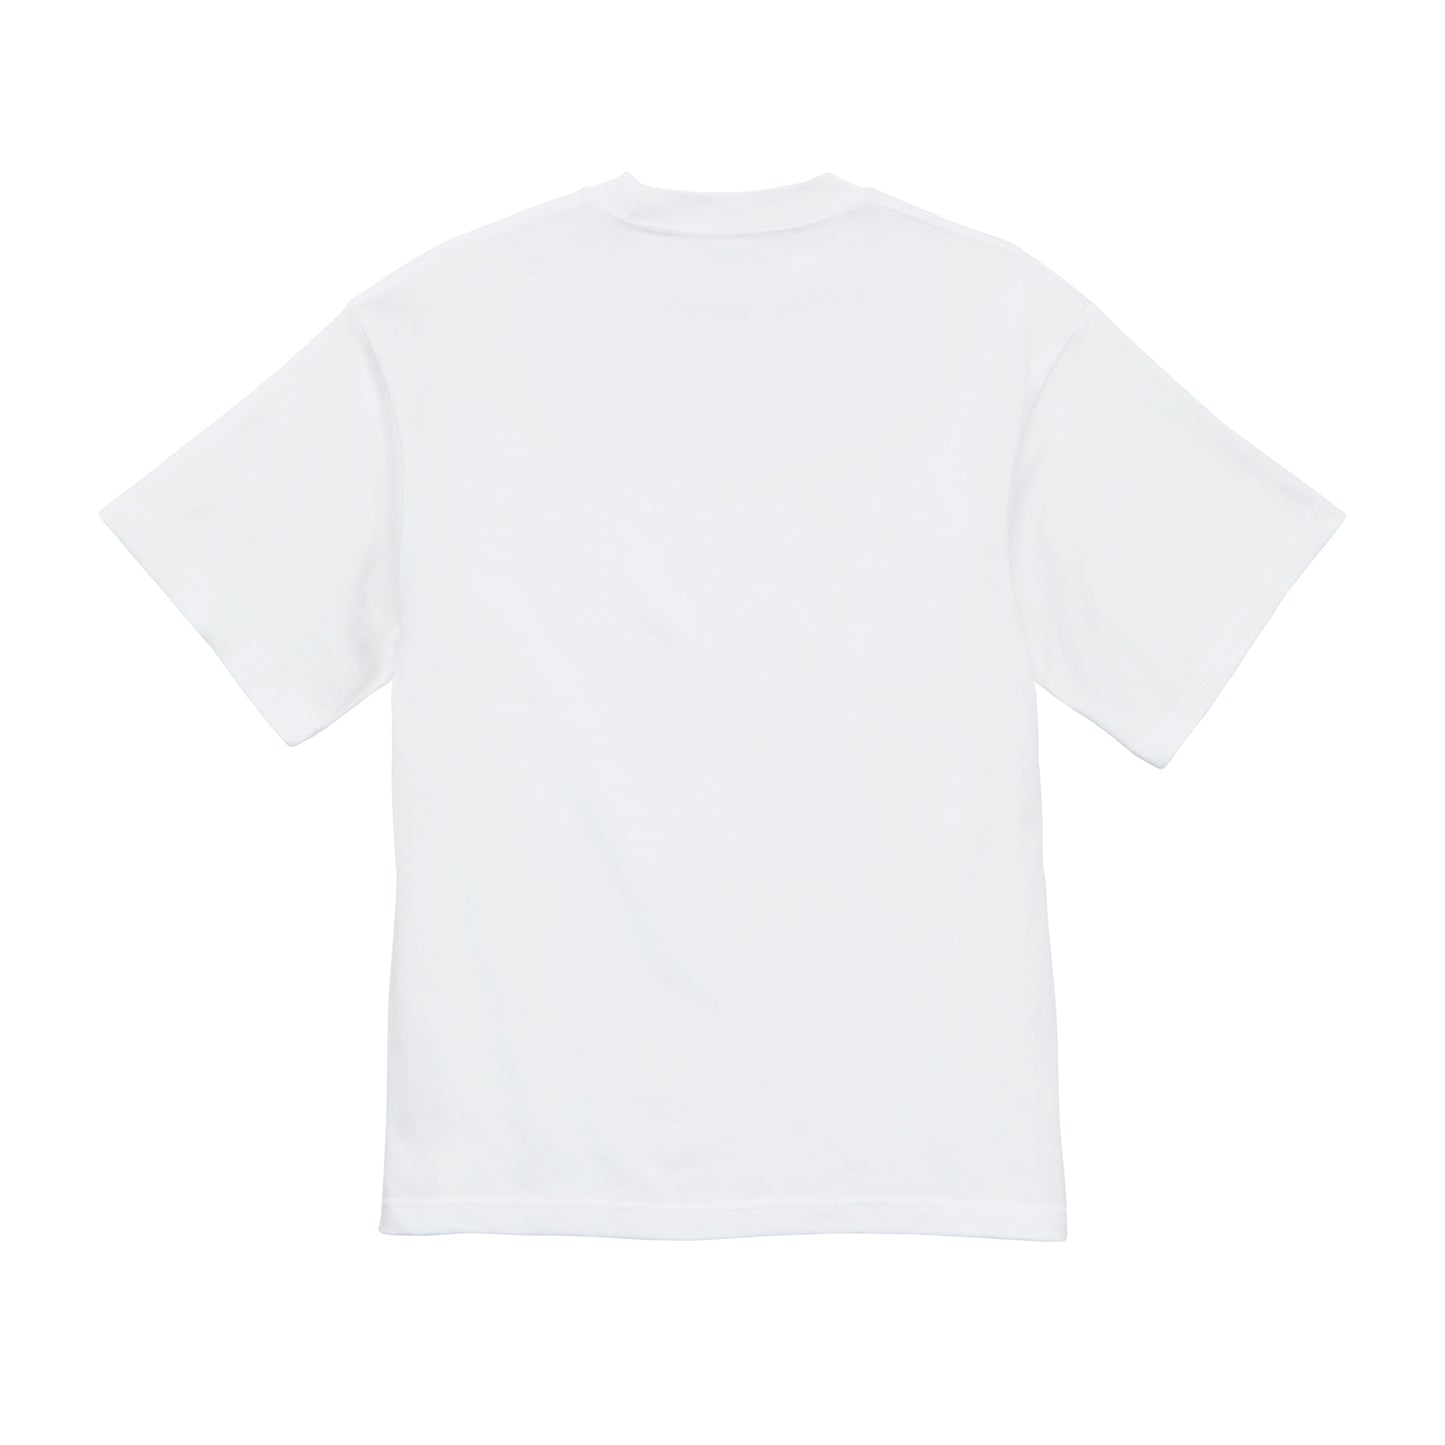 8.2oz オーガニックコットン Tシャツ (UA-5117)